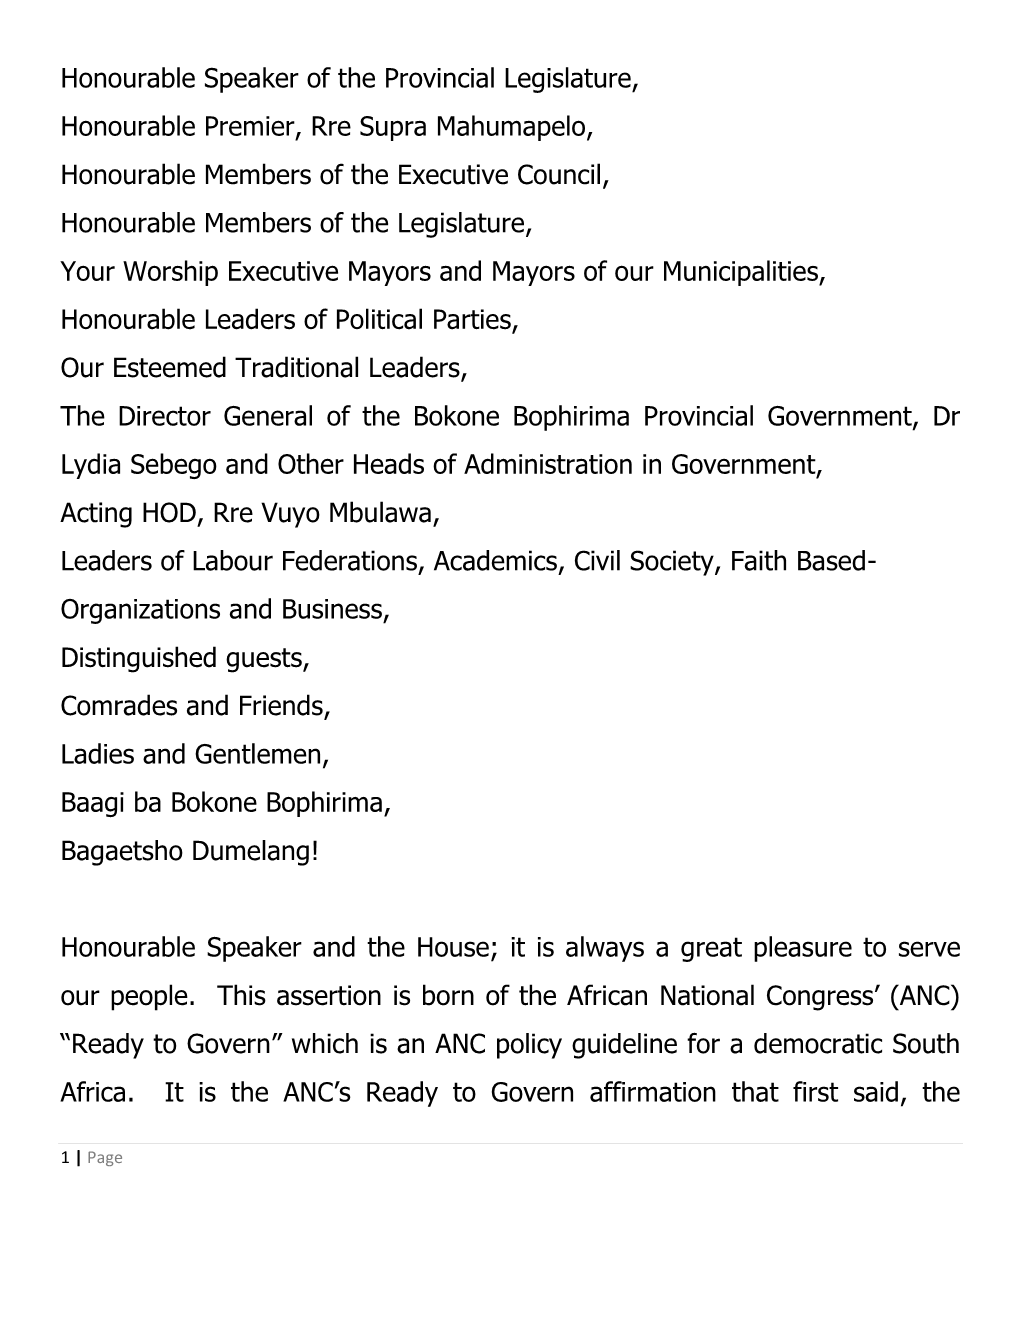 Honourable Speaker of the Provincial Legislature, Honourable Premier, Rre Supra Mahumapelo, Honourable Members of the Executiv